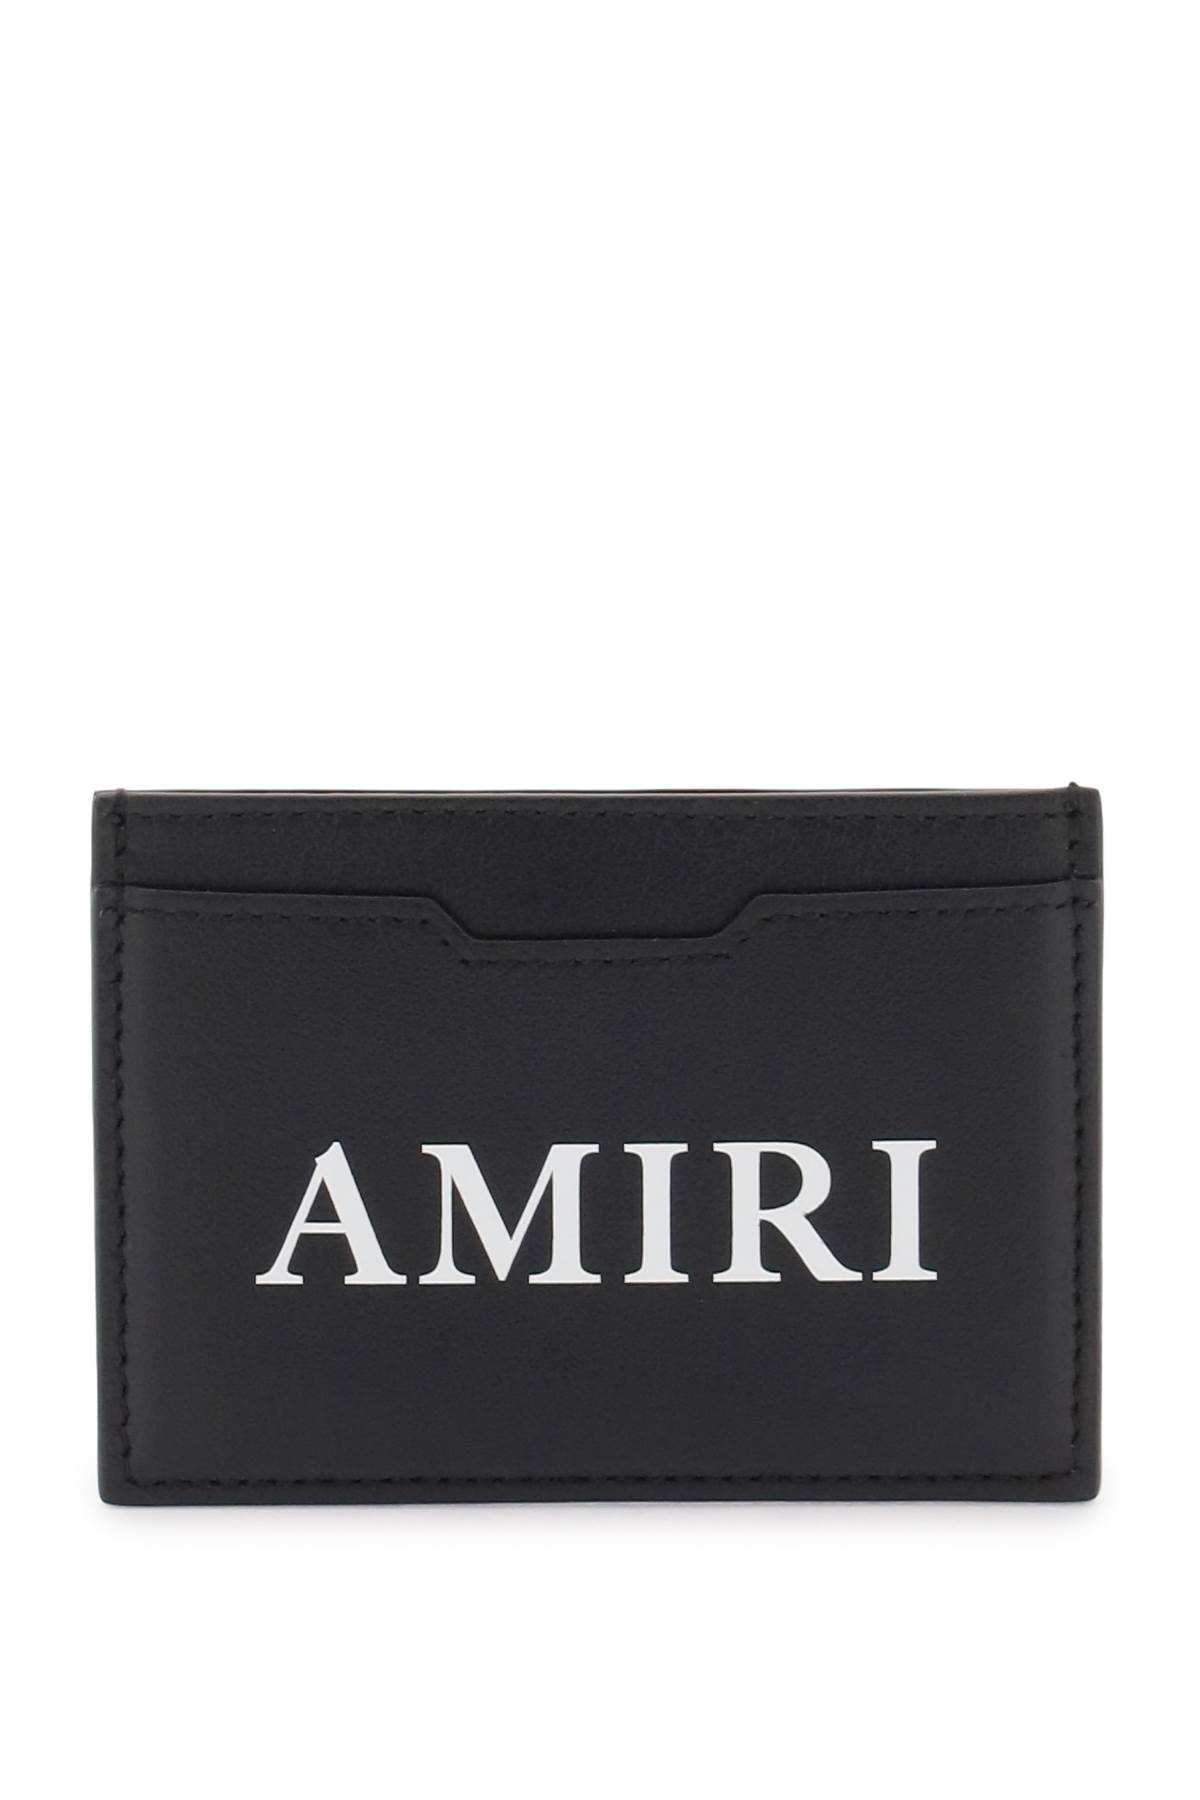 AMIRI logo cardholder